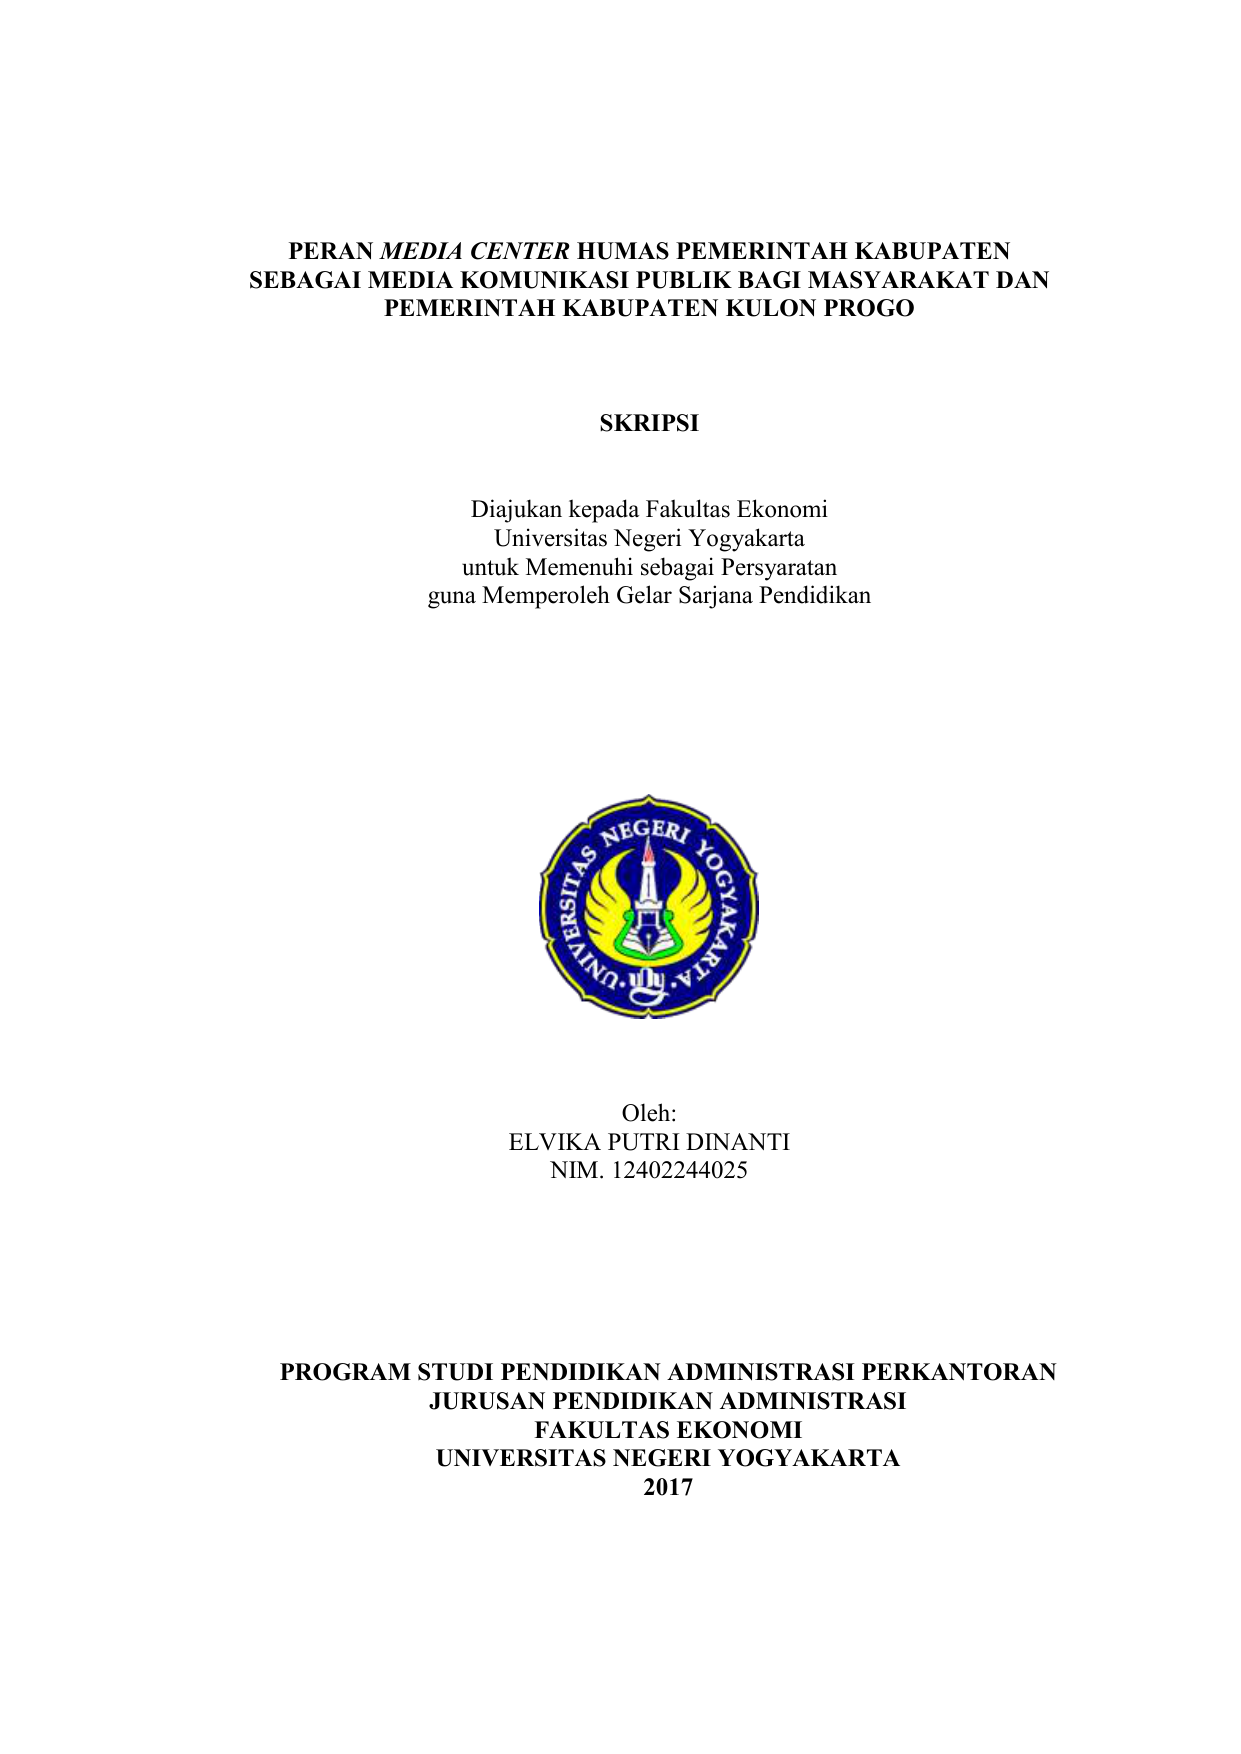 KABUPATEN KULON PROGO SKRIPSI Diajukan kepada Fakultas Ekonomi Universitas Negeri Yogyakarta untuk Memenuhi sebagai Persyaratan guna Memperoleh Gelar